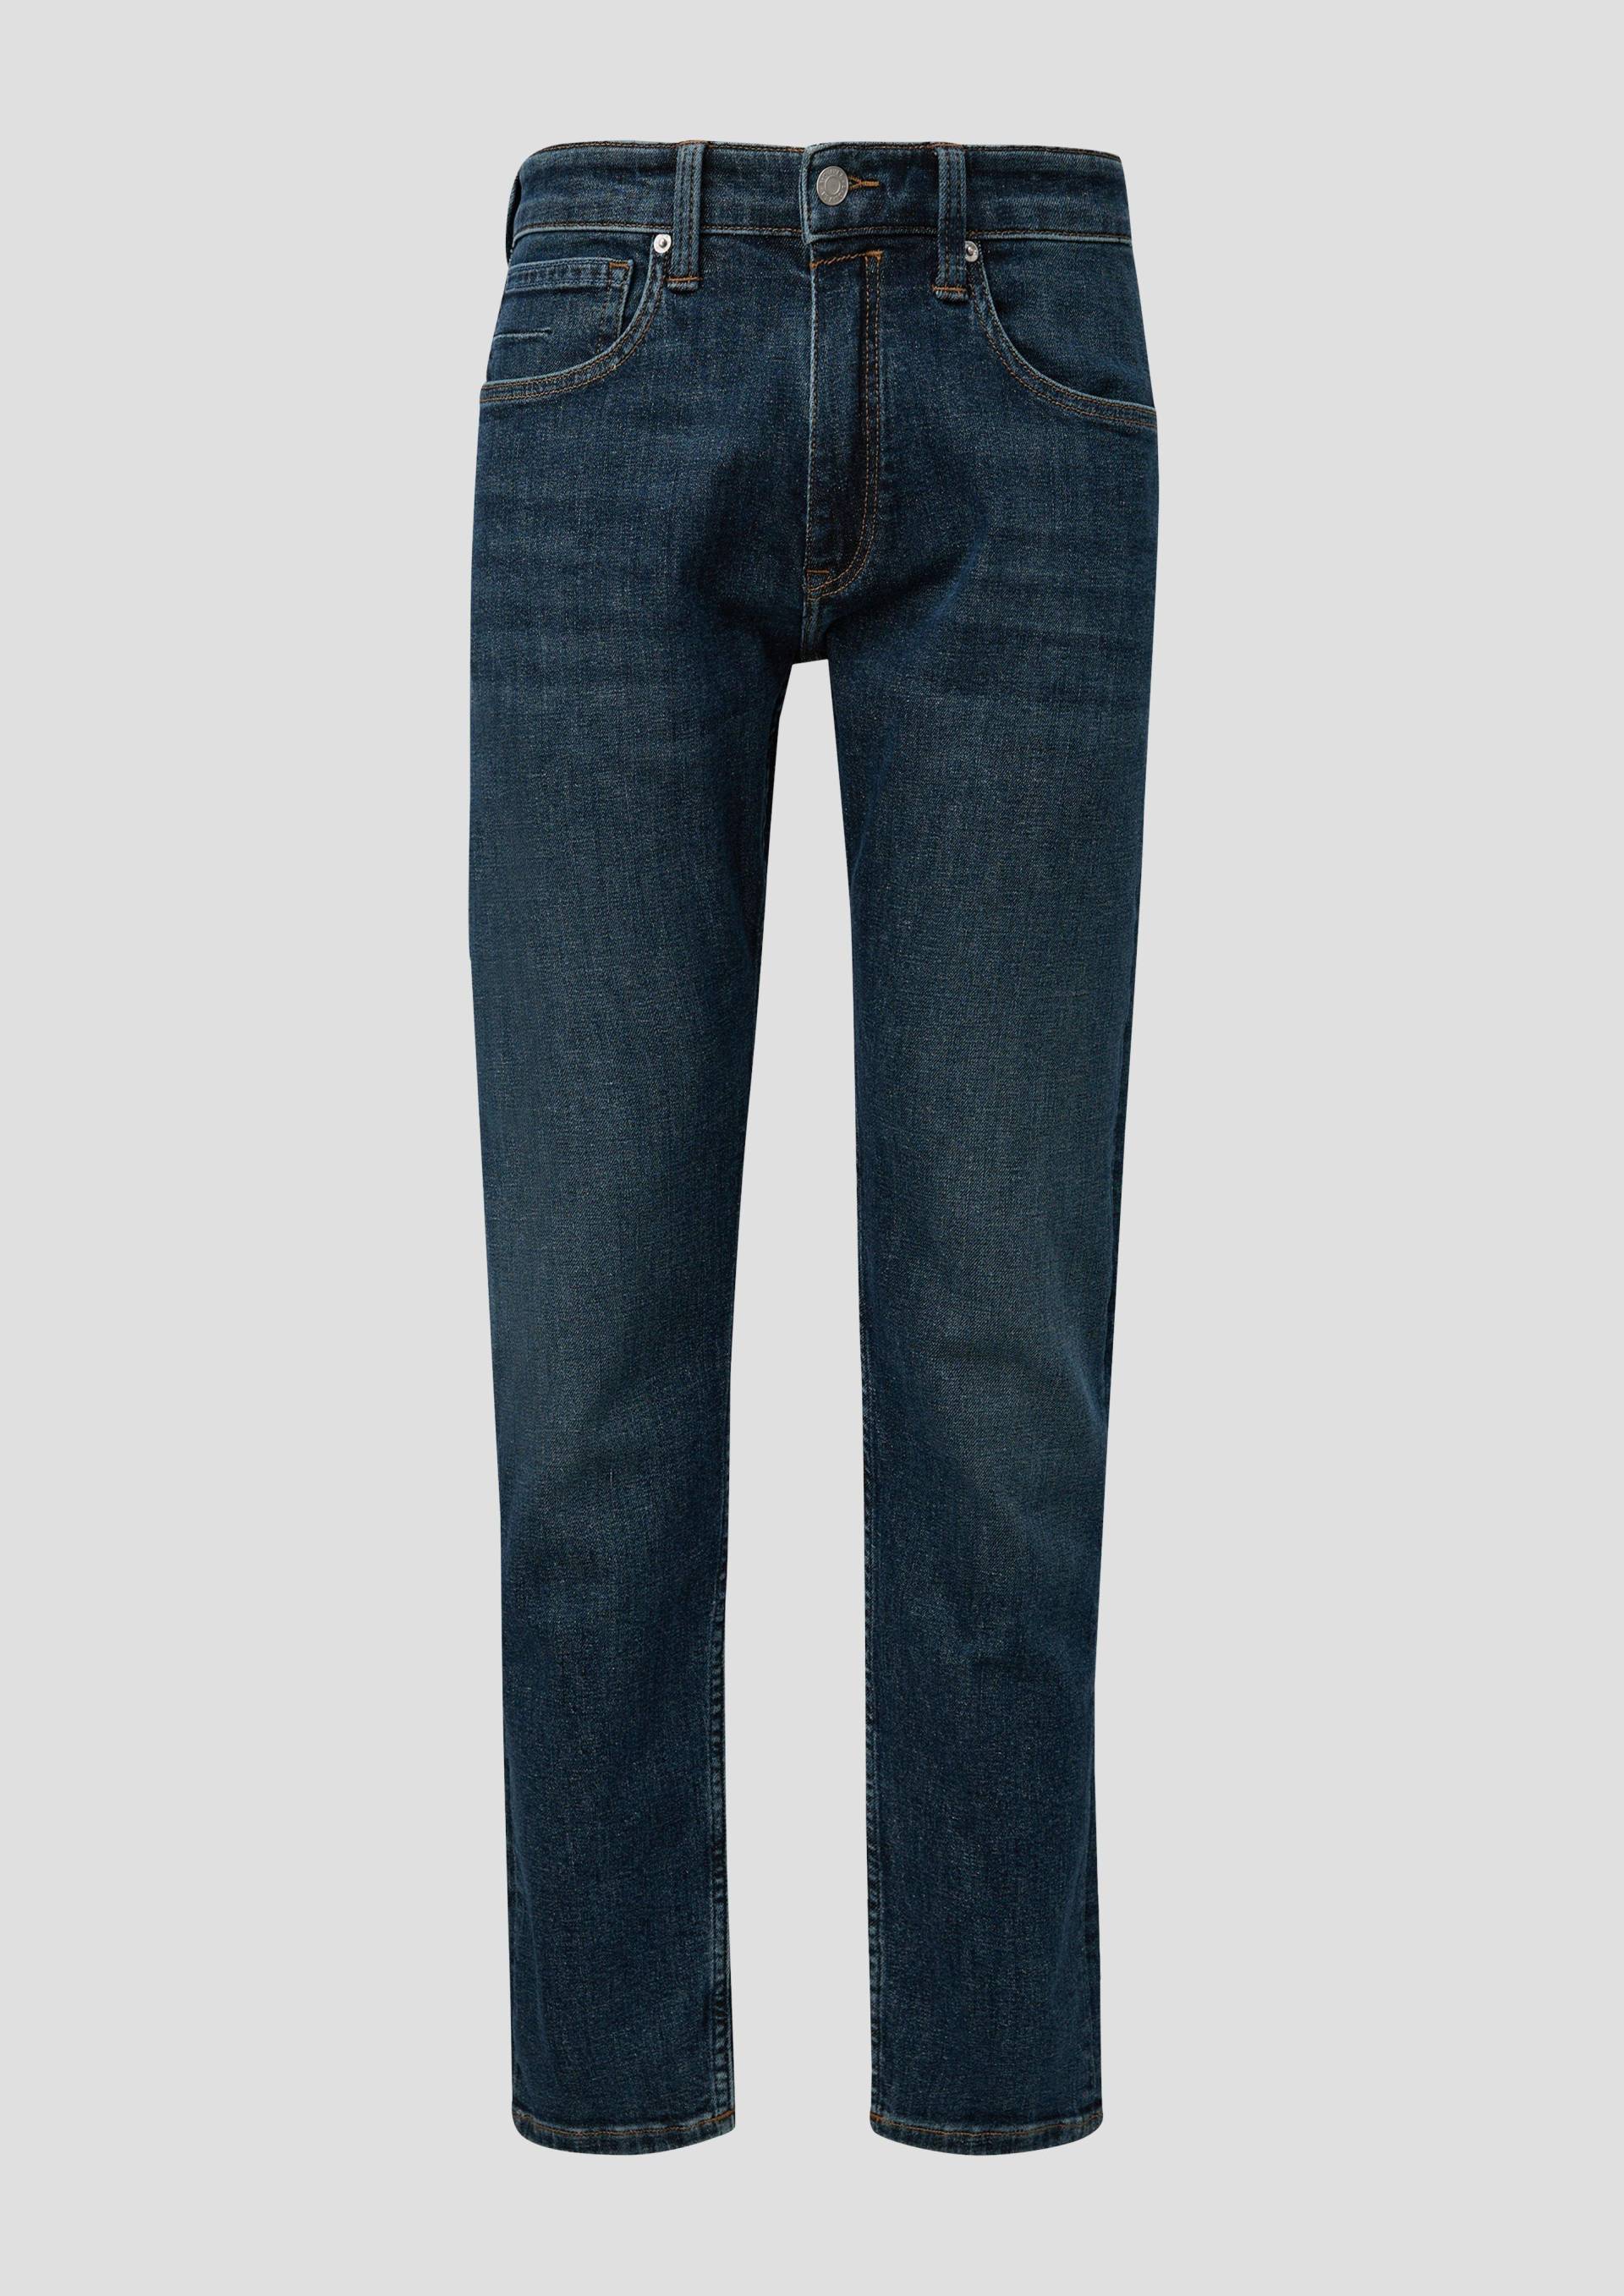 s.Oliver - Jeans / Regular Fit / High Rise / Tapered Leg, Herren, blau von s.Oliver